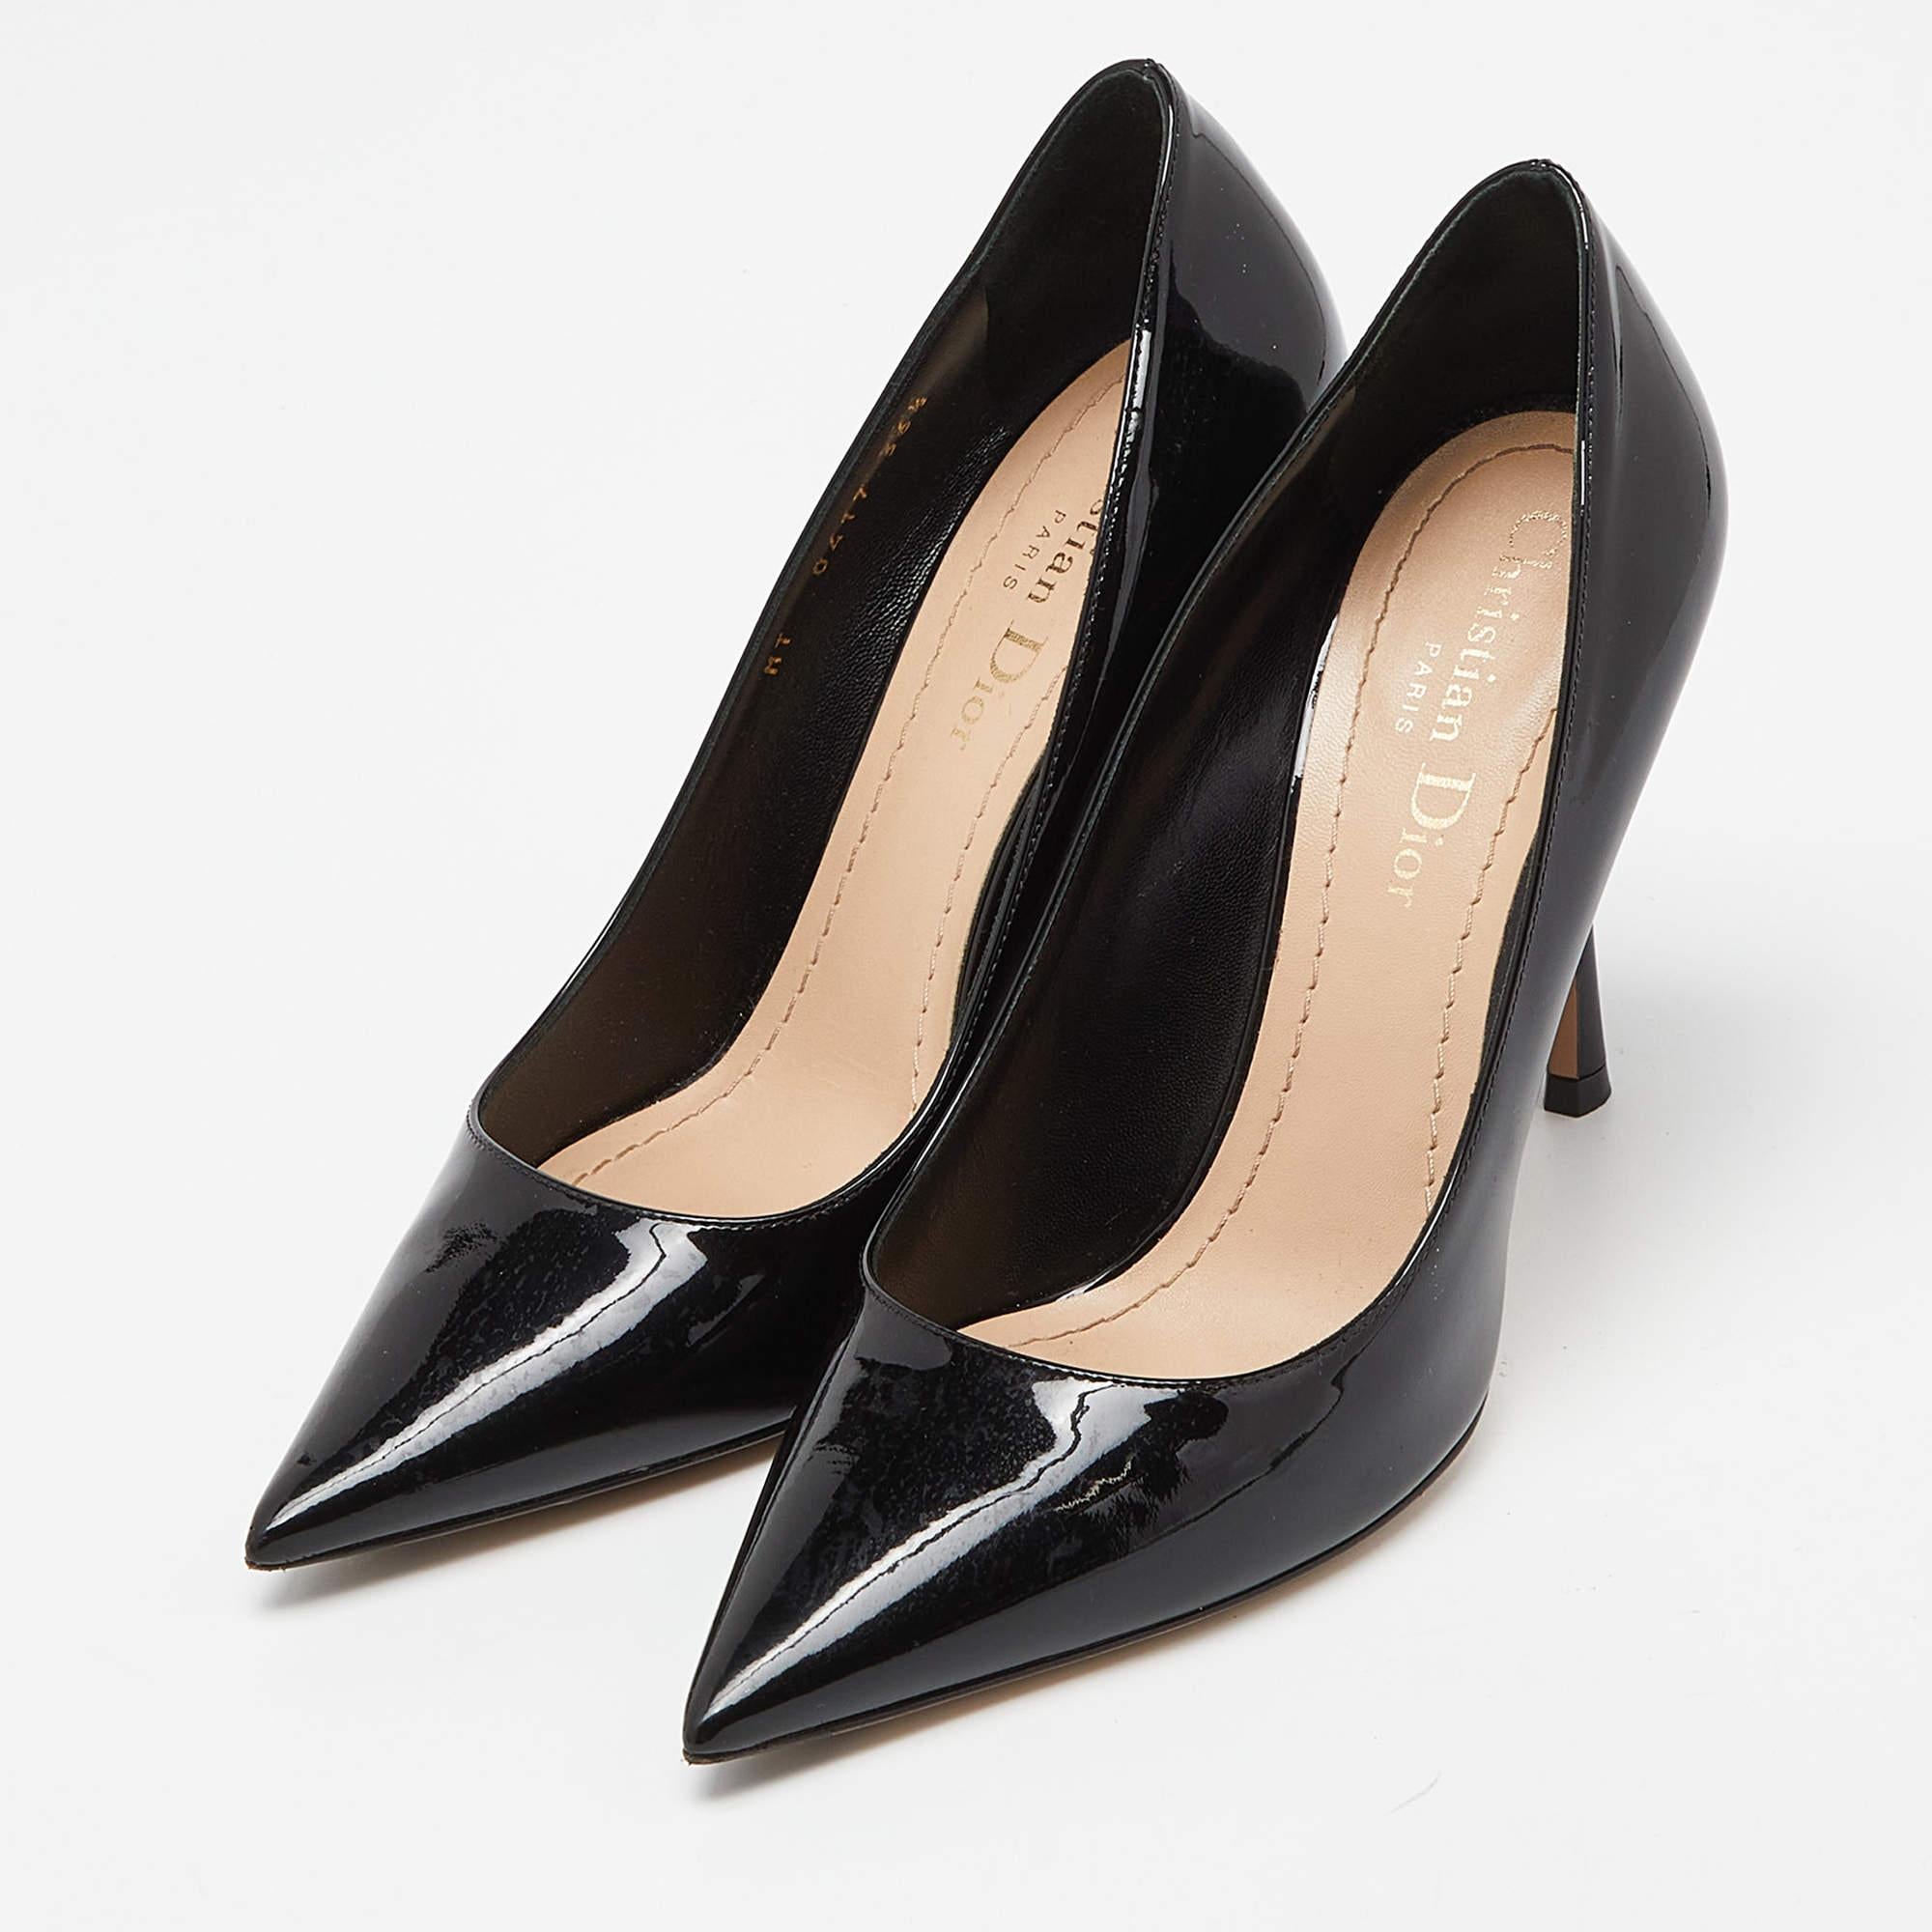 Dior Black Patent Leather Pointed Toe Pumps Size 36.5 In Good Condition For Sale In Dubai, Al Qouz 2